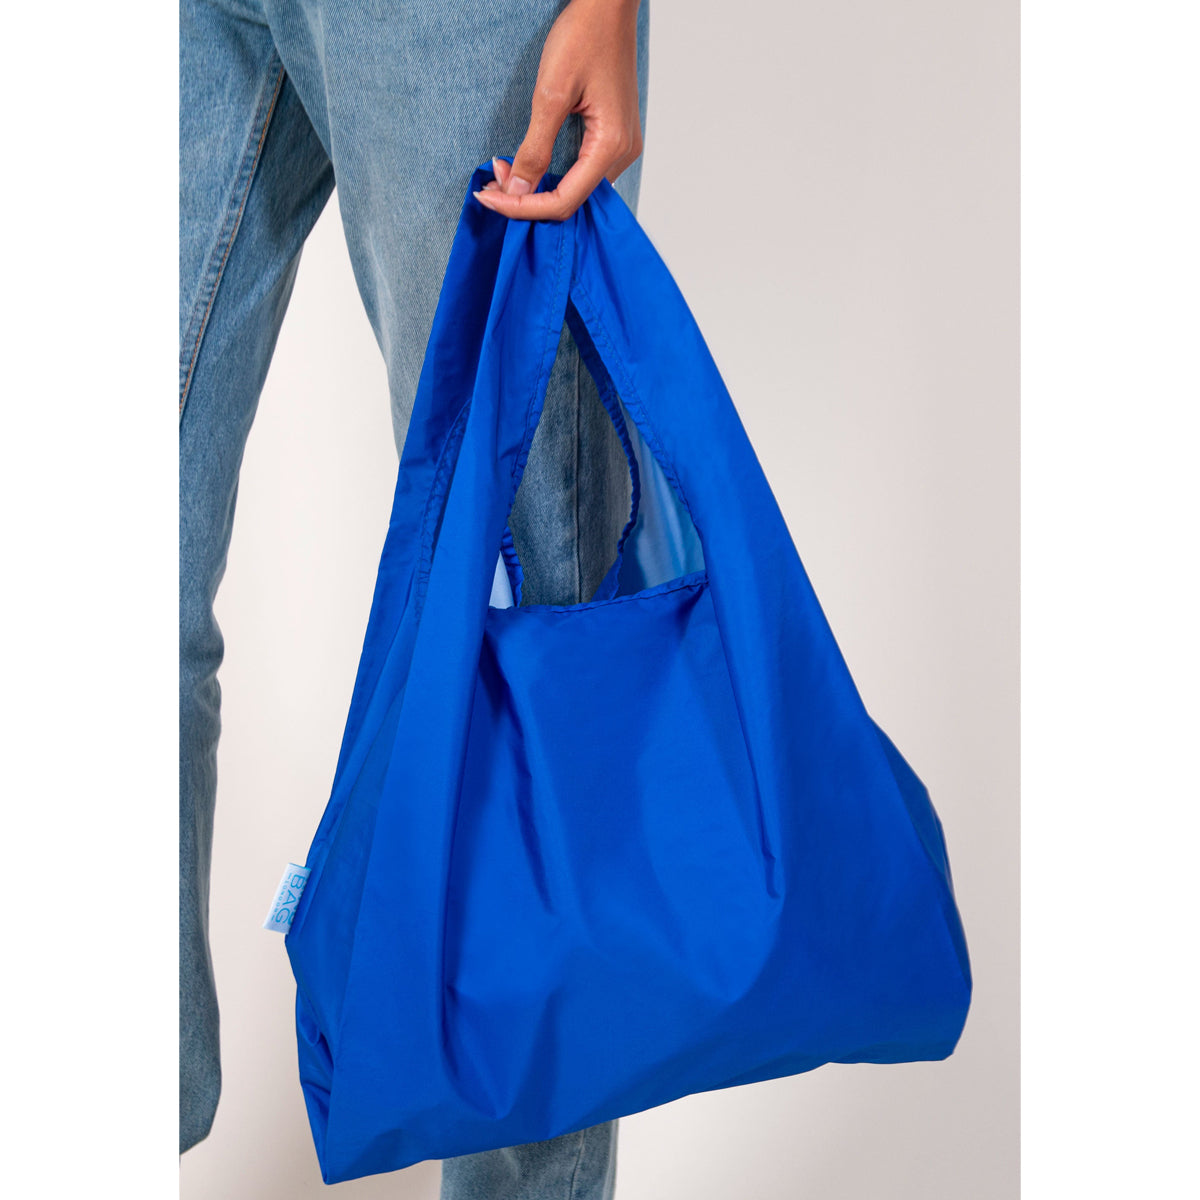 Kind Bag Reusable Foldaway Tote - Sapphire Blue 4